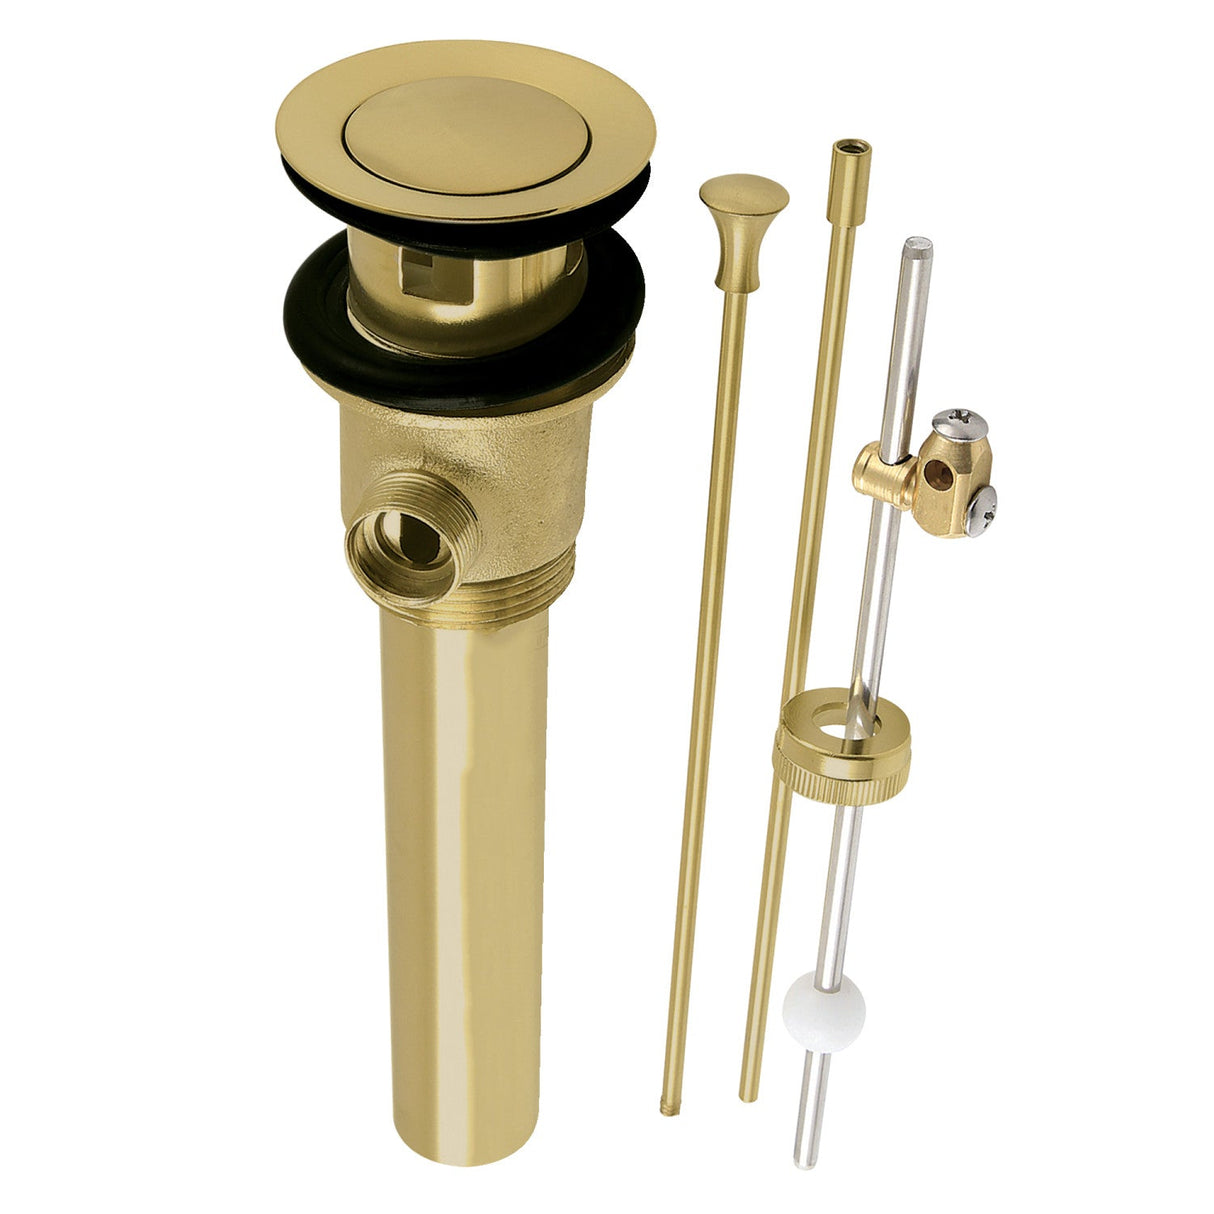 Made To Match KBT2127 Brass Pop-Up Bathroom Sink Drain with Overflow, 22 Gauge, Brushed Brass